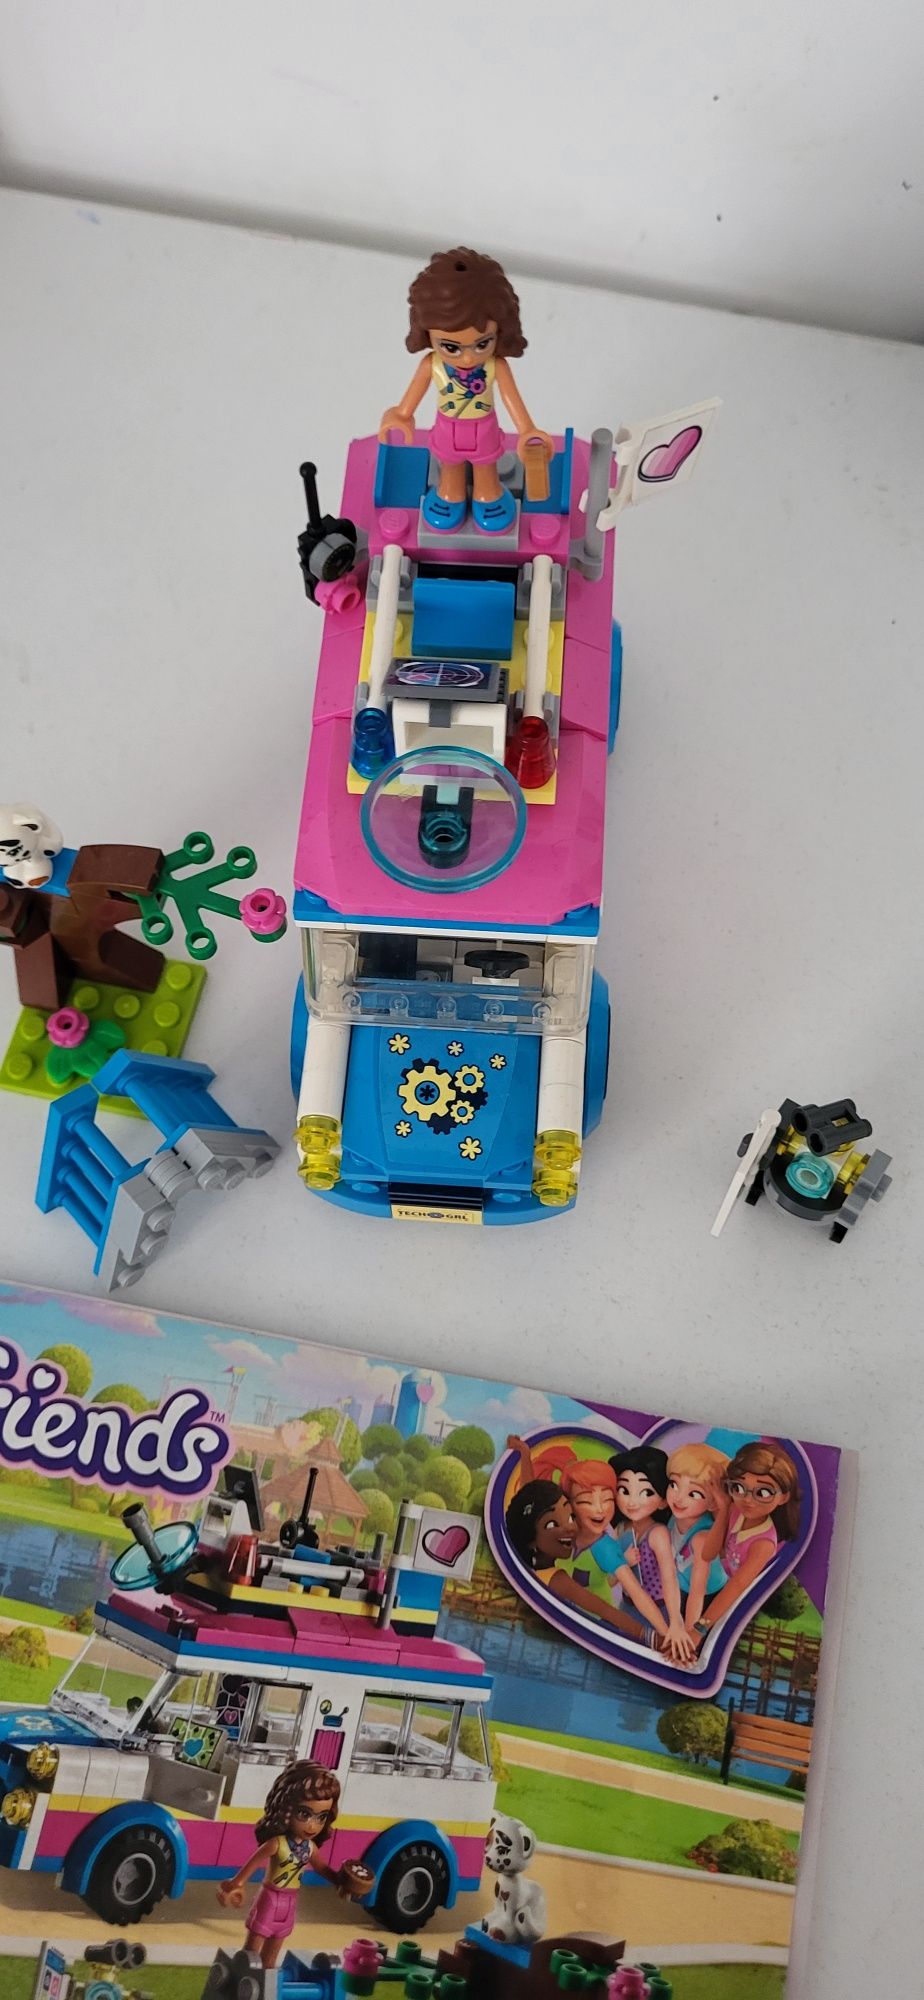 Lego Friends 41333 - Olivia’s Mission Vehicle (2018) 60lei

Setul este